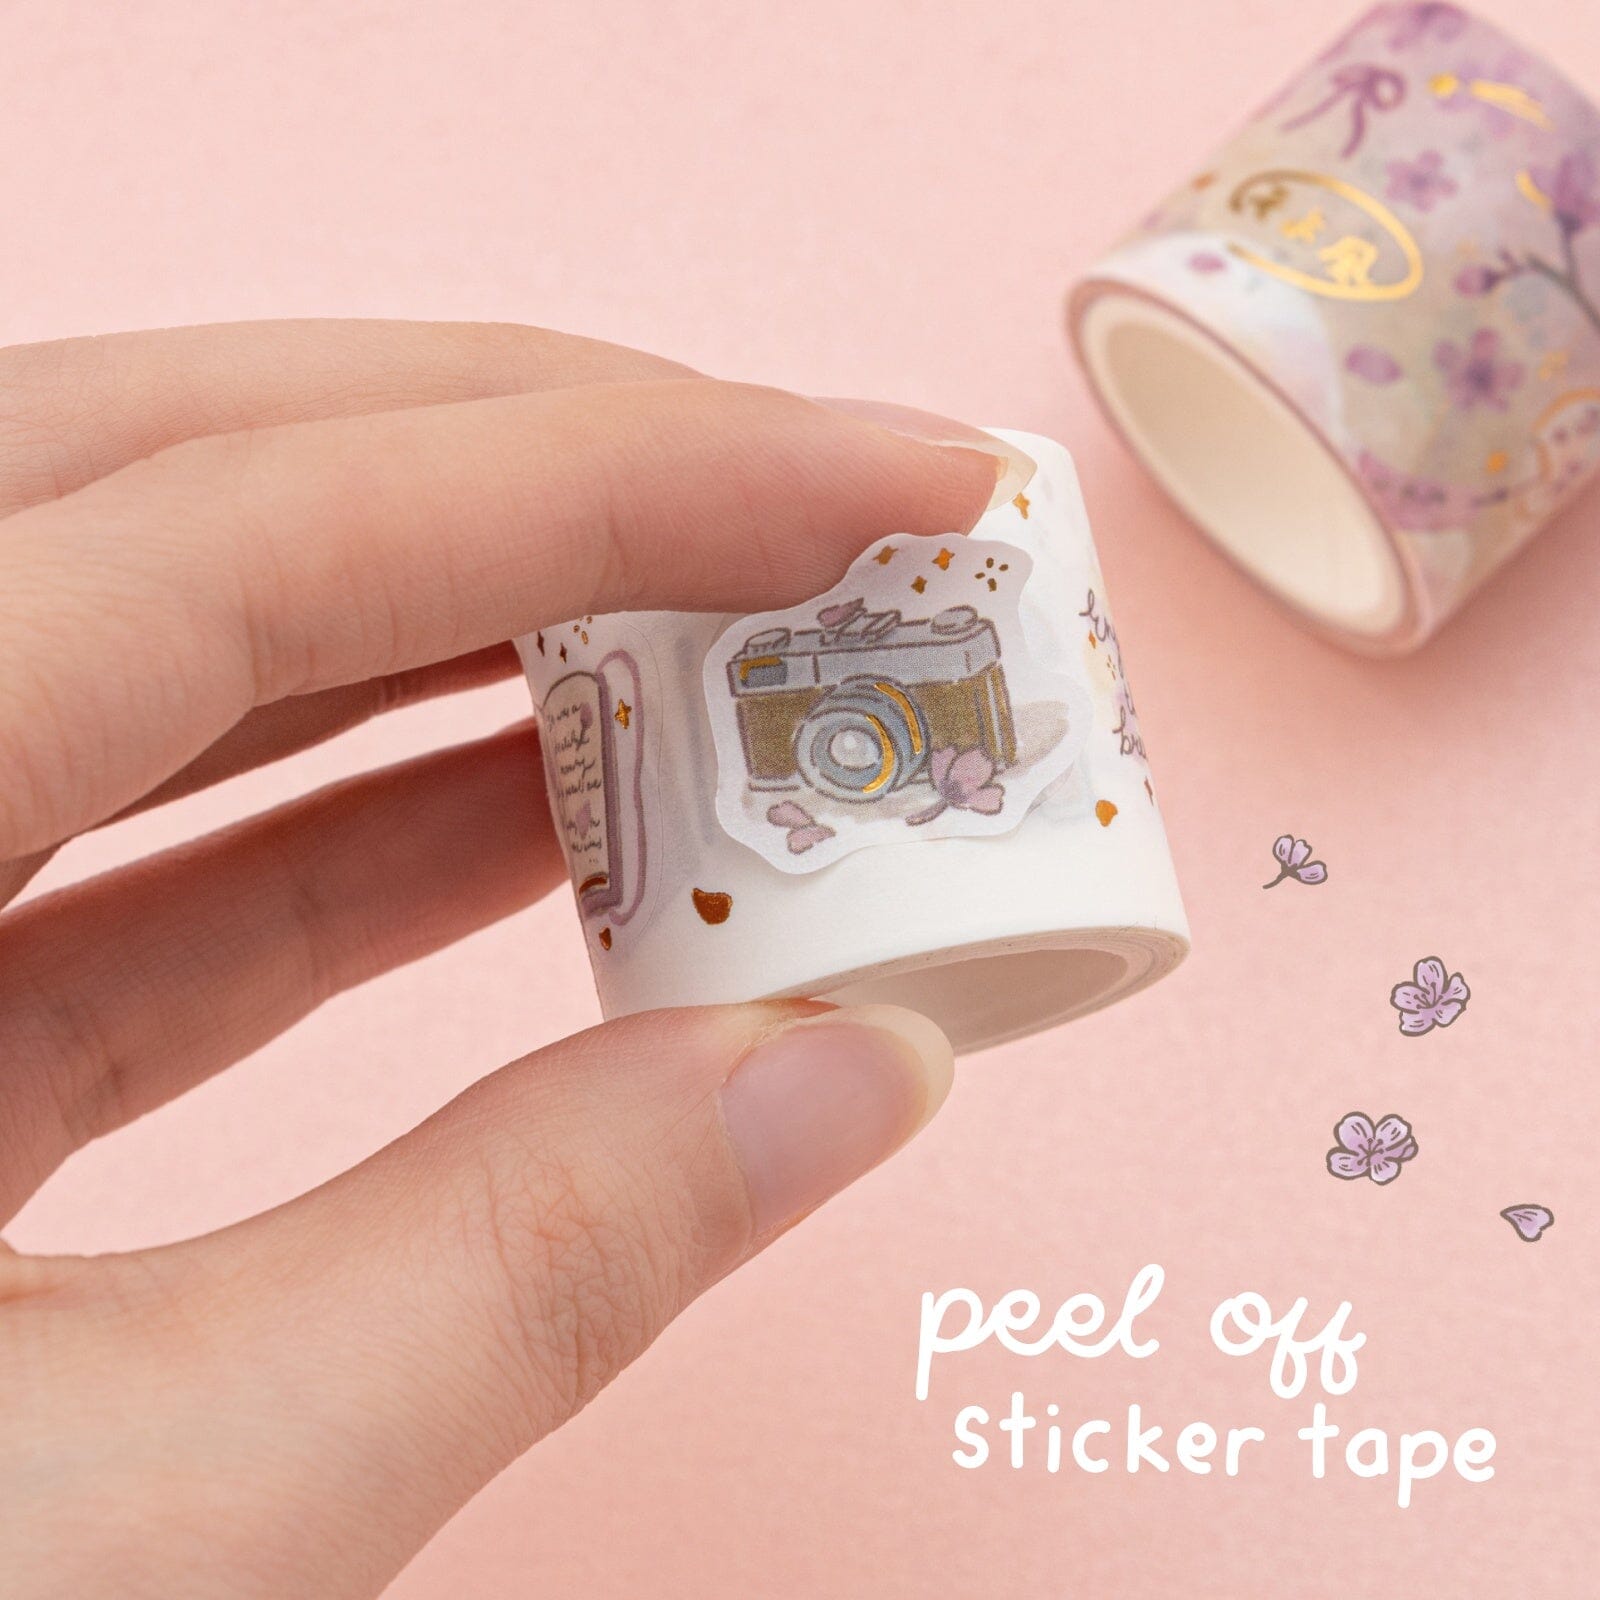 Peel of sticker tape close up showing illustration of vintage camer with sakura illustrations